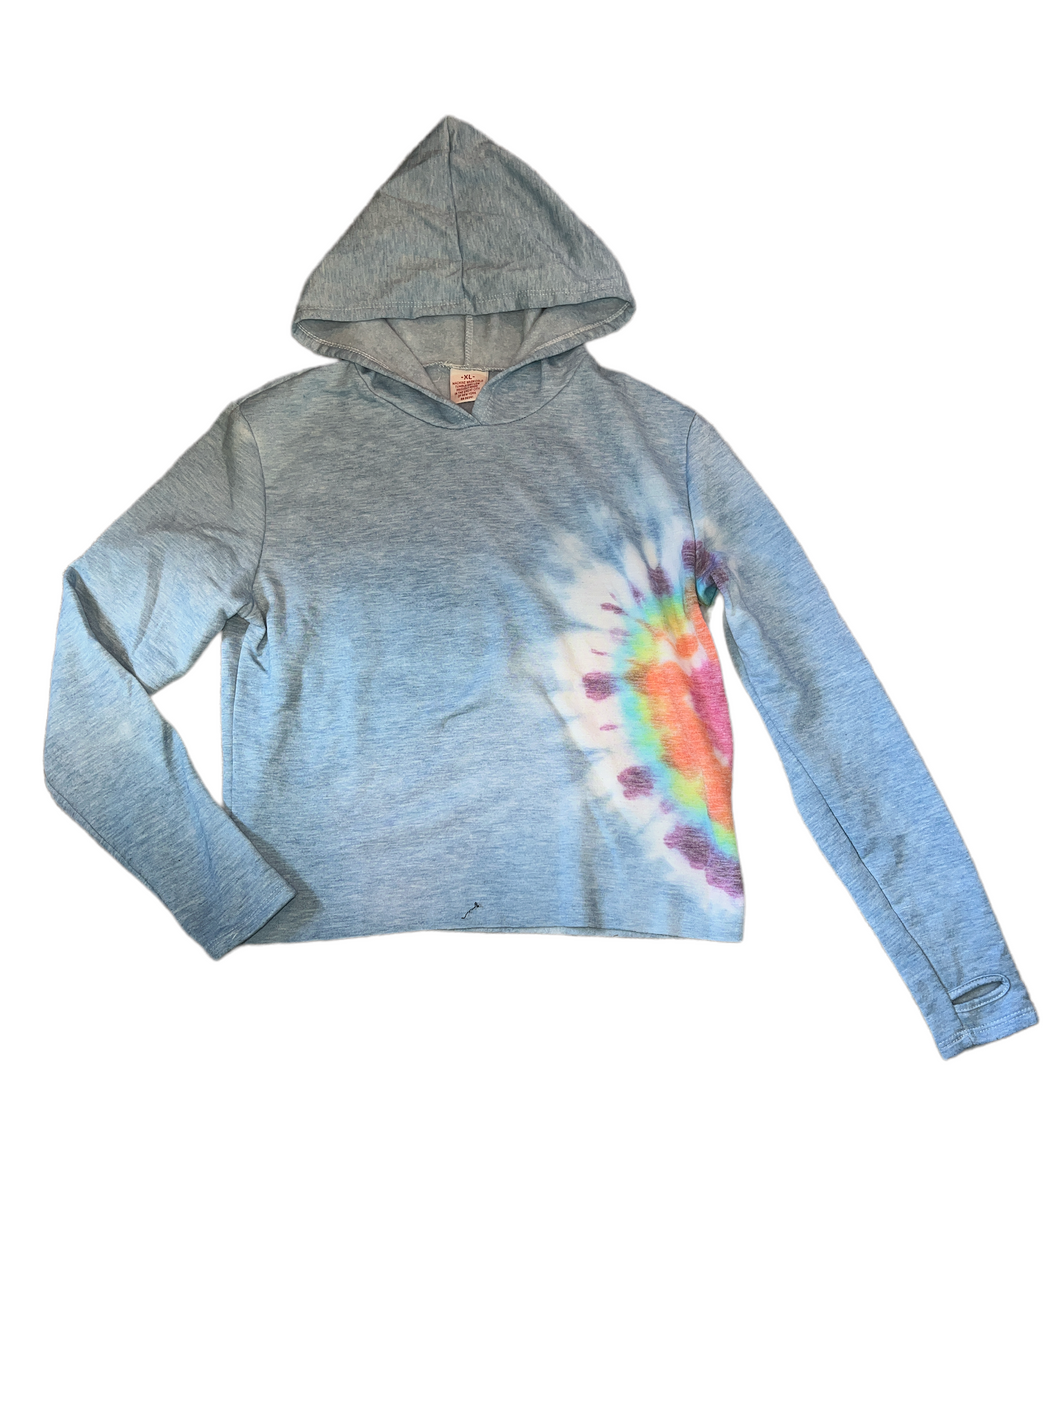 Firehouse girls blue rainbow tie dye hoodie sweatshirt XL(14)